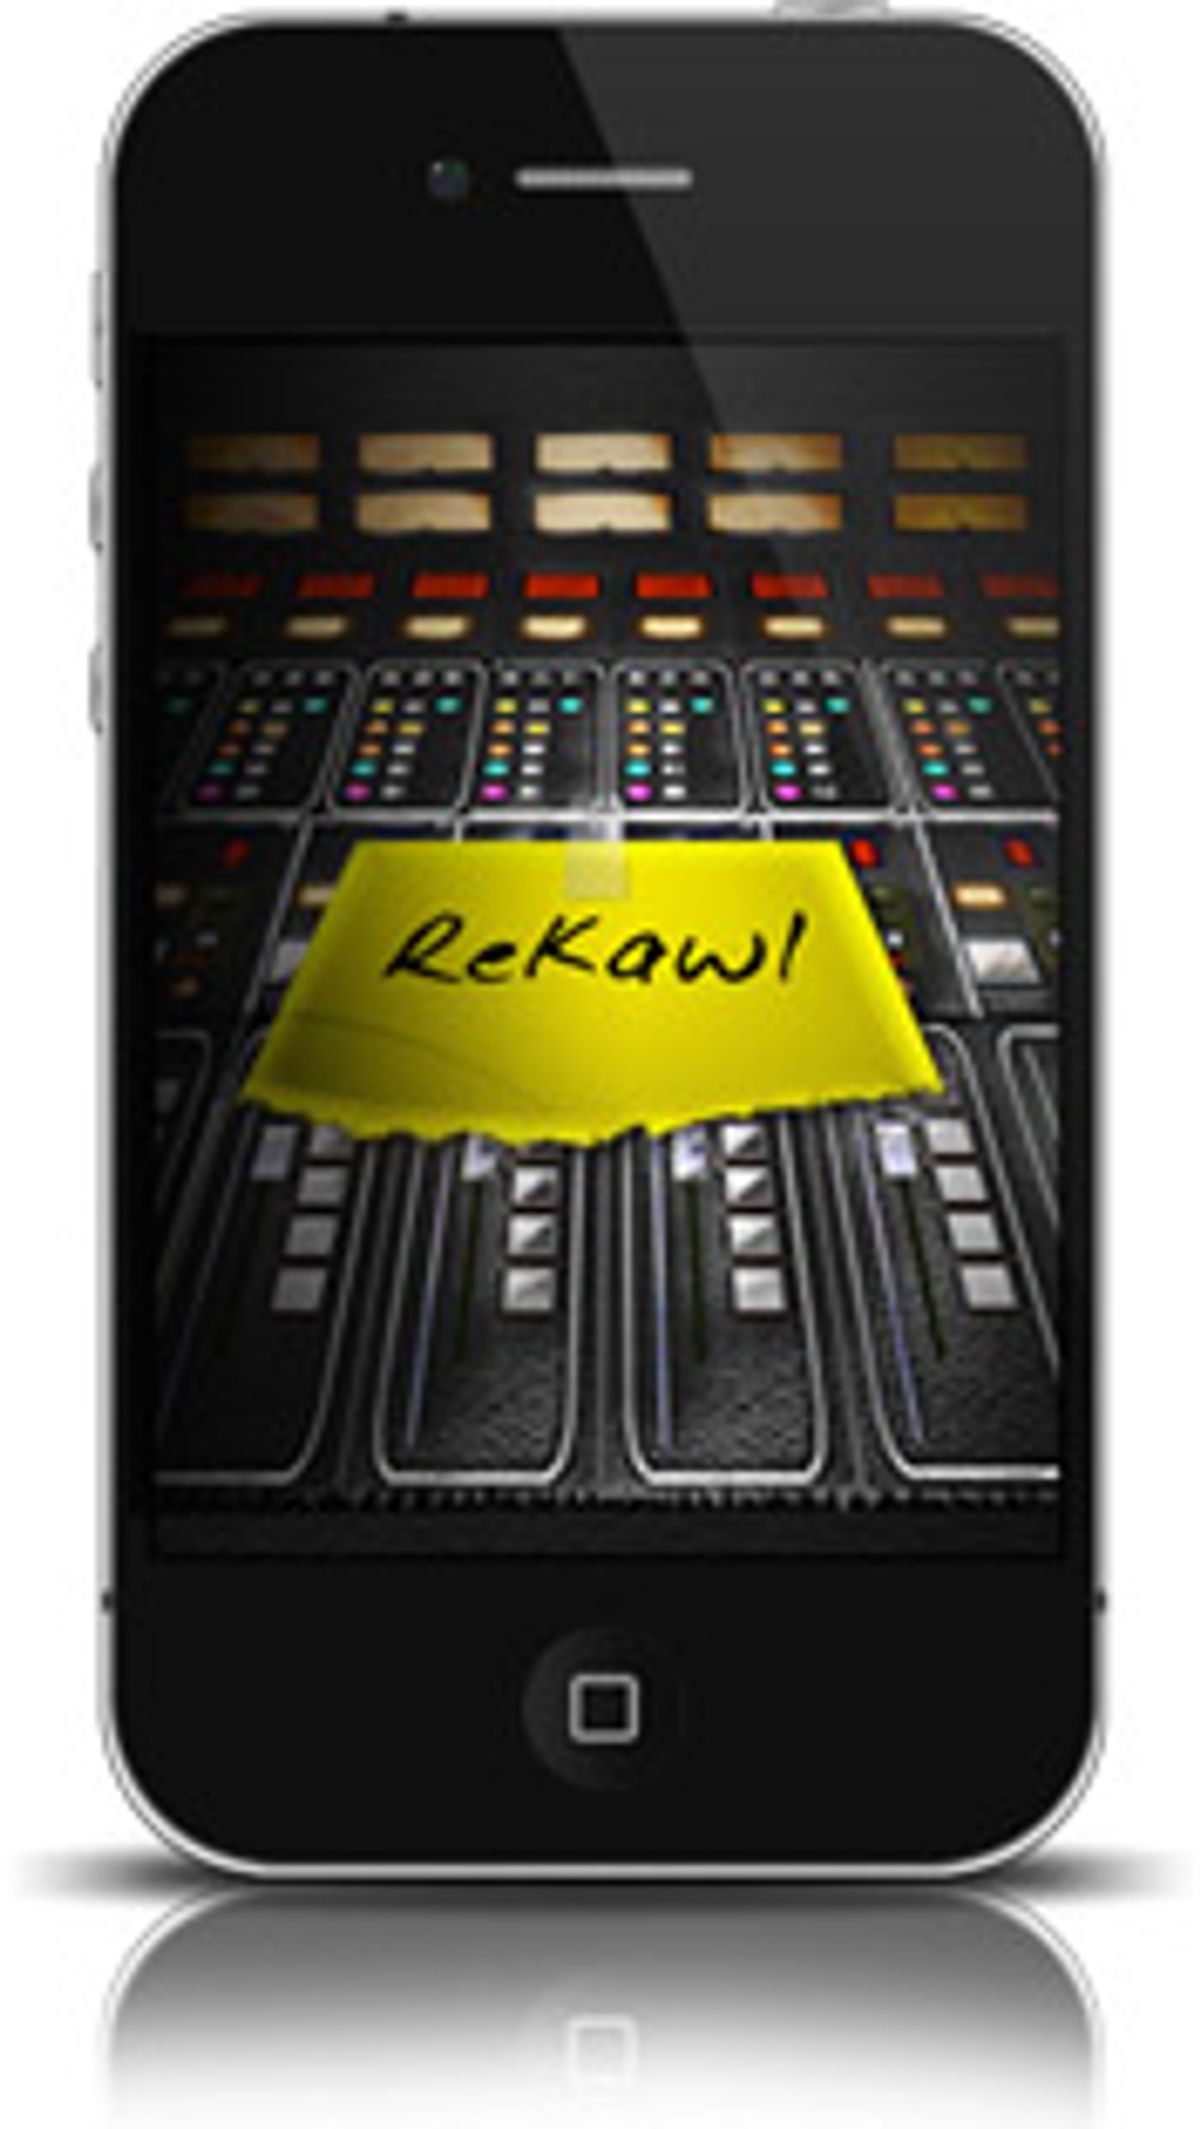 Sahe Audio Announces ReKawl iPhone App